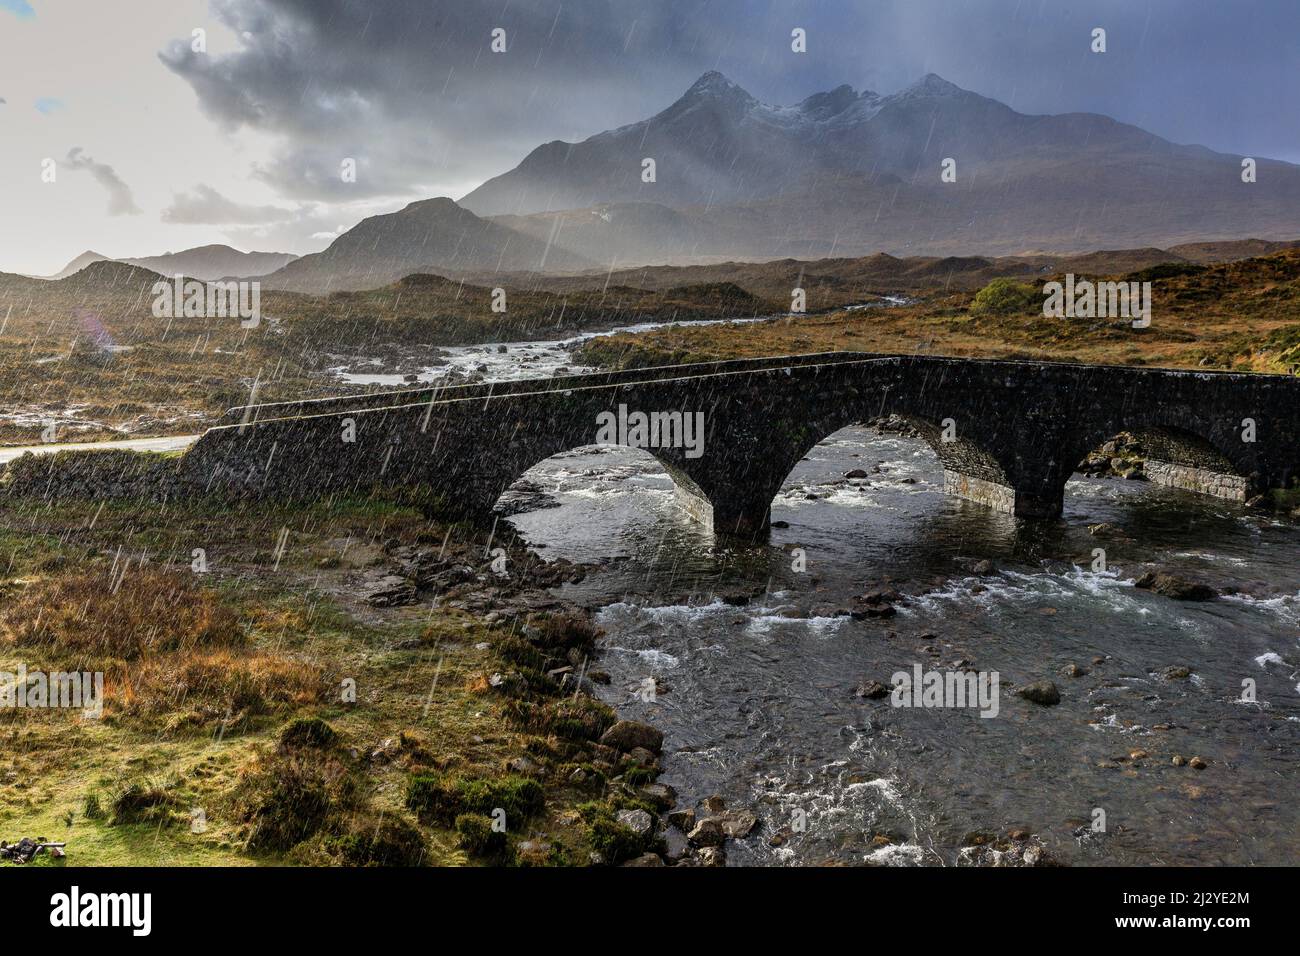 Sun and raindrops, historic stone bridge, Sligachan Bridge, Cuilins mountain range, Isle of Skye, Scotland, UK Stock Photo